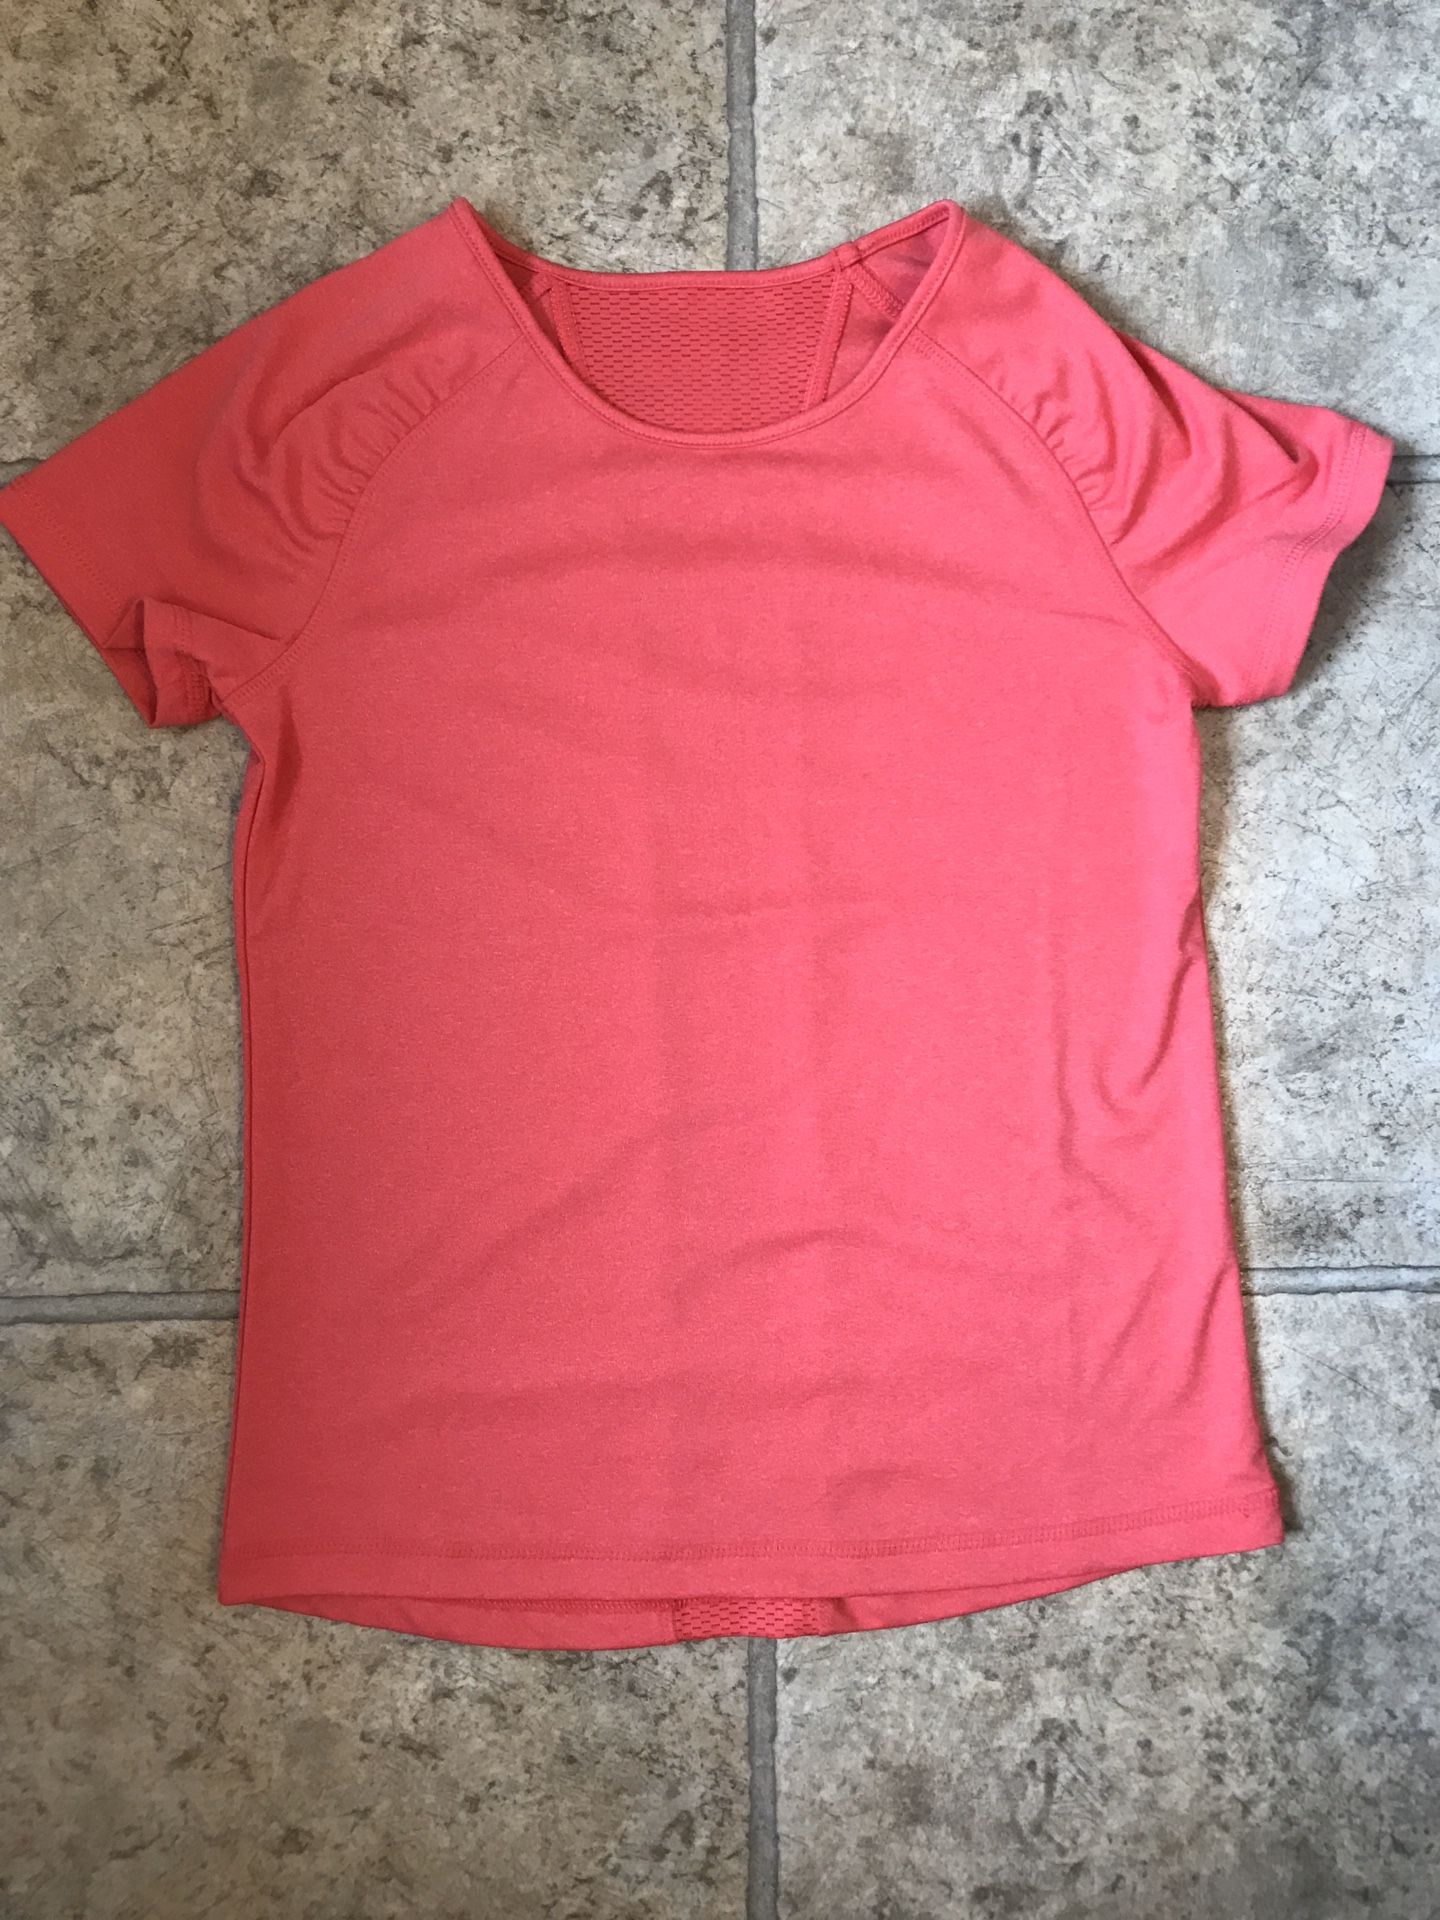 Girls Size 7/8 Coral Shirt